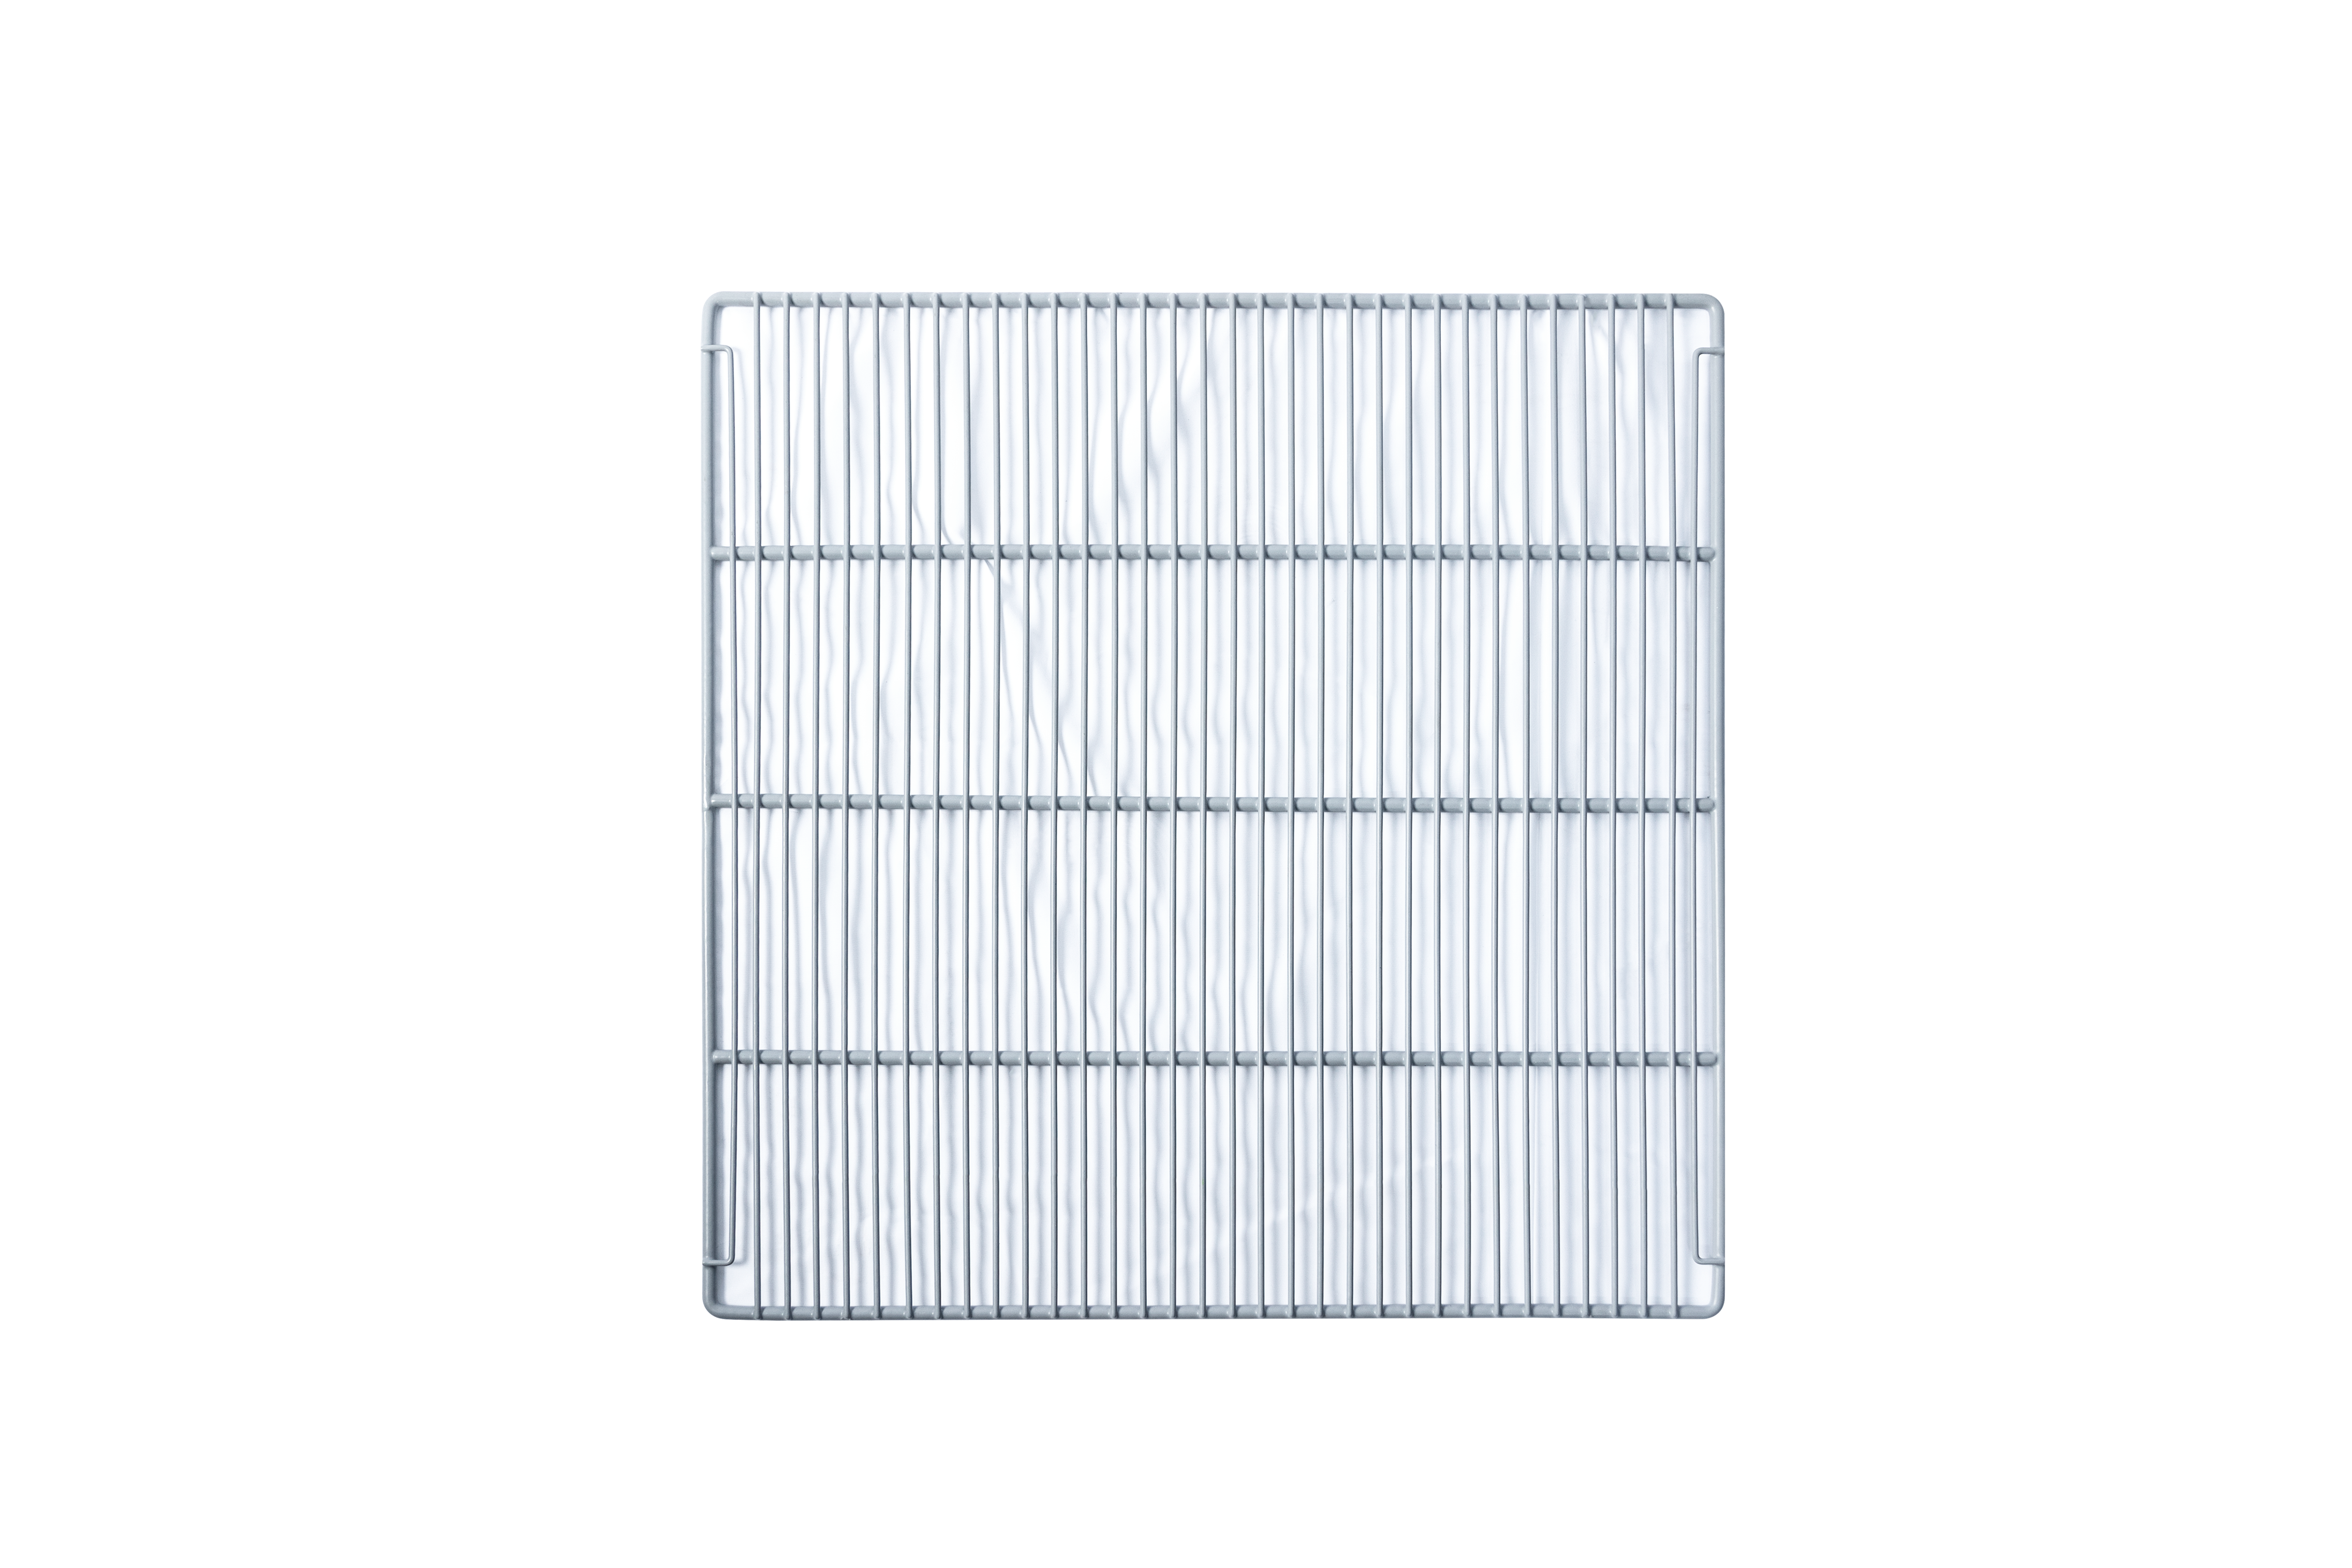 Adjustable Epoxy-coated Wire Shelf for TPP44, TPP93 (Left / Right)- Enhance Organization with Sturdy Utility Shelf - (Gray) Commercial Refrigerator Shelf Set of 1